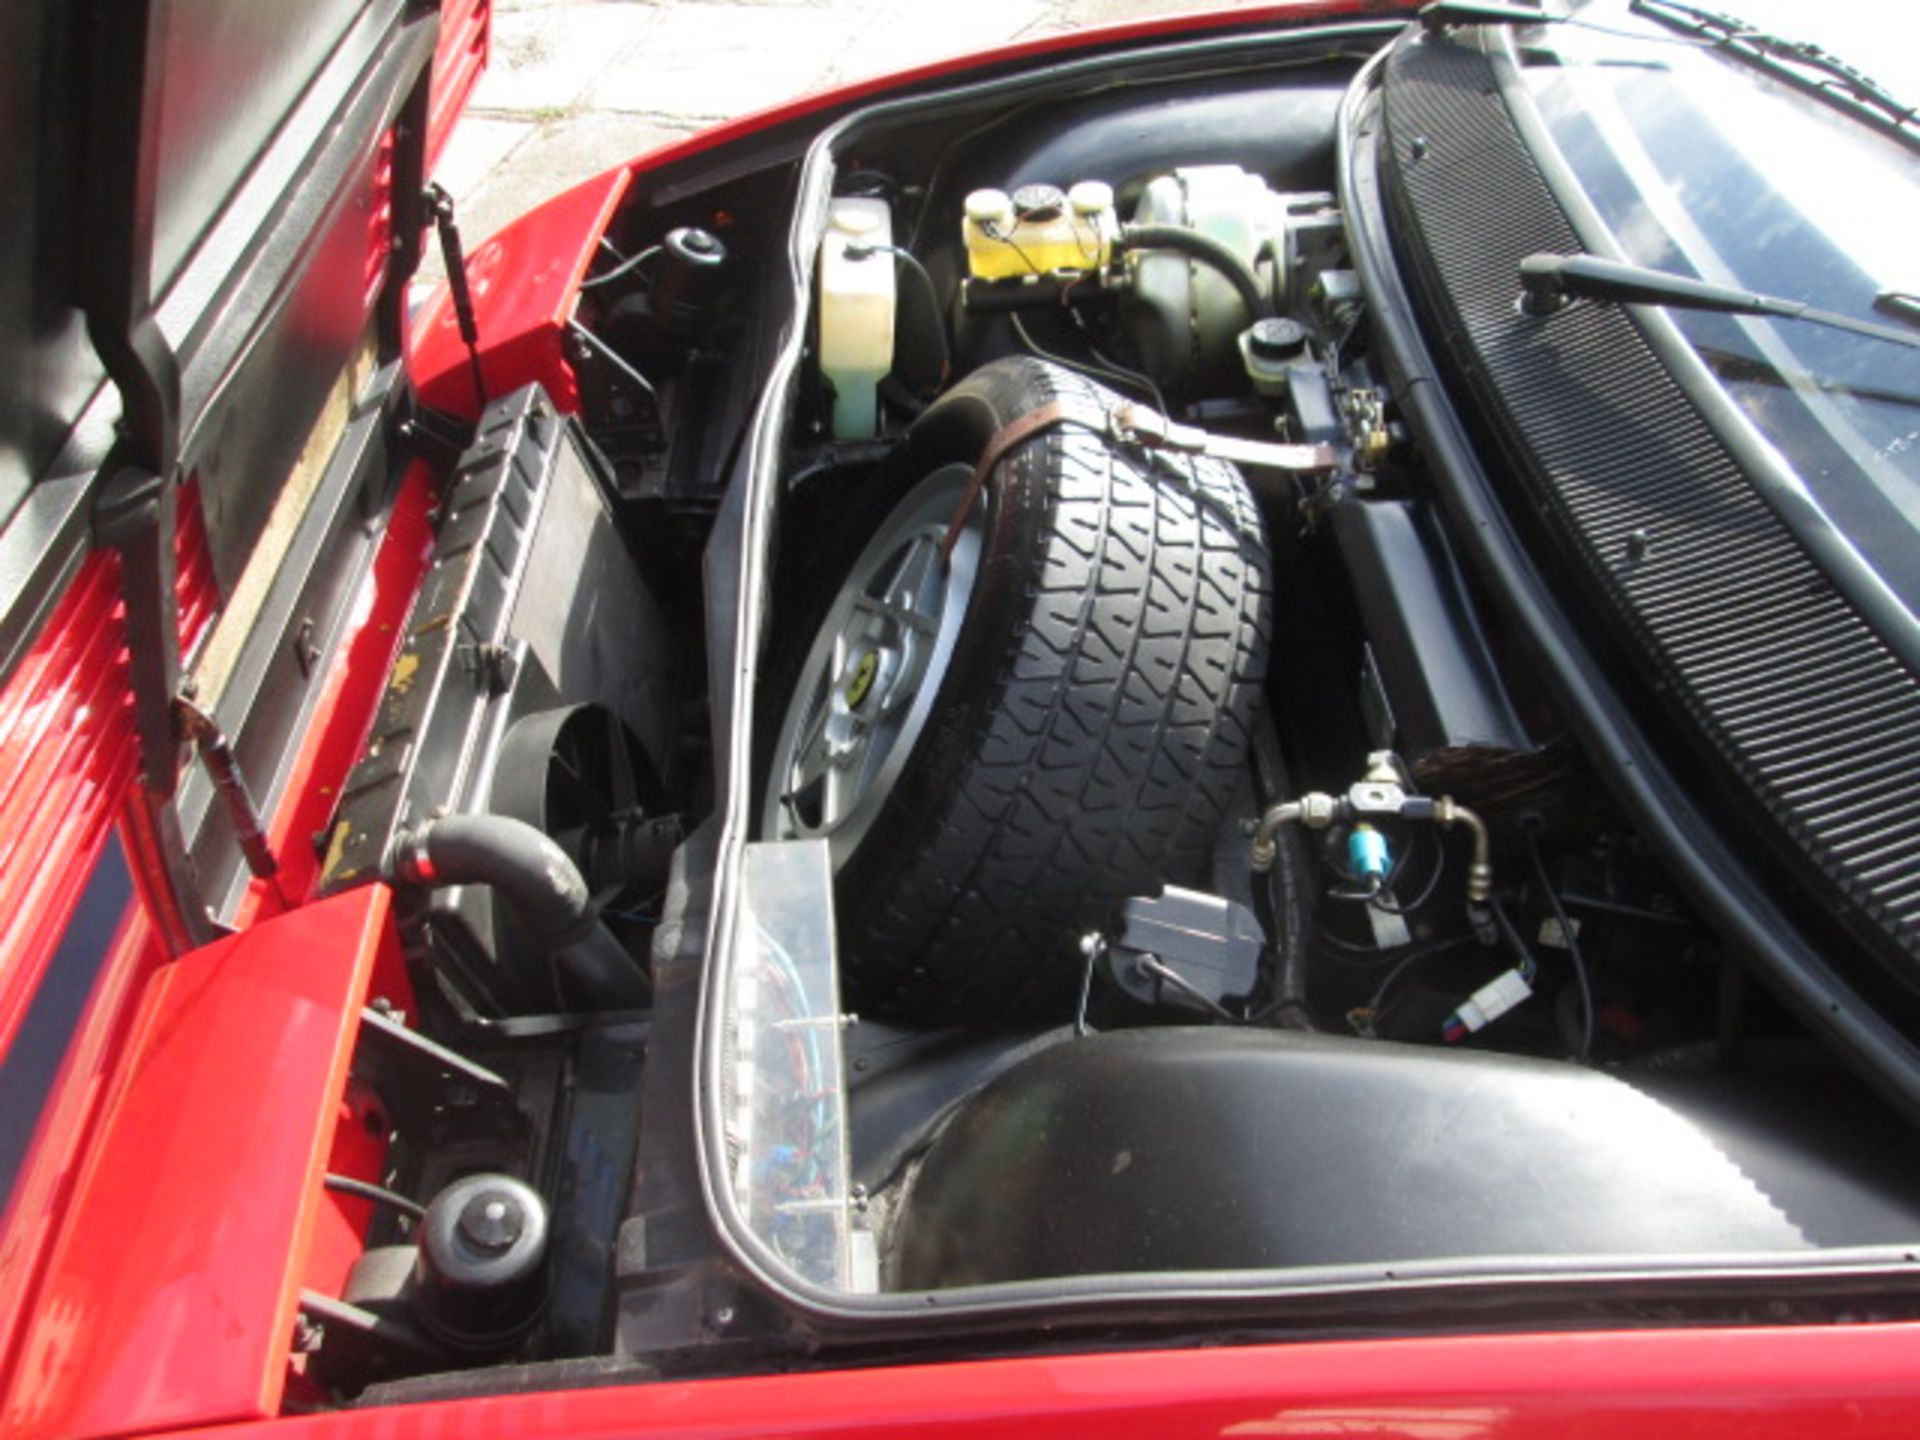 Ferrari Mondial 8 RHD 2926cc Coupe - Image 5 of 25